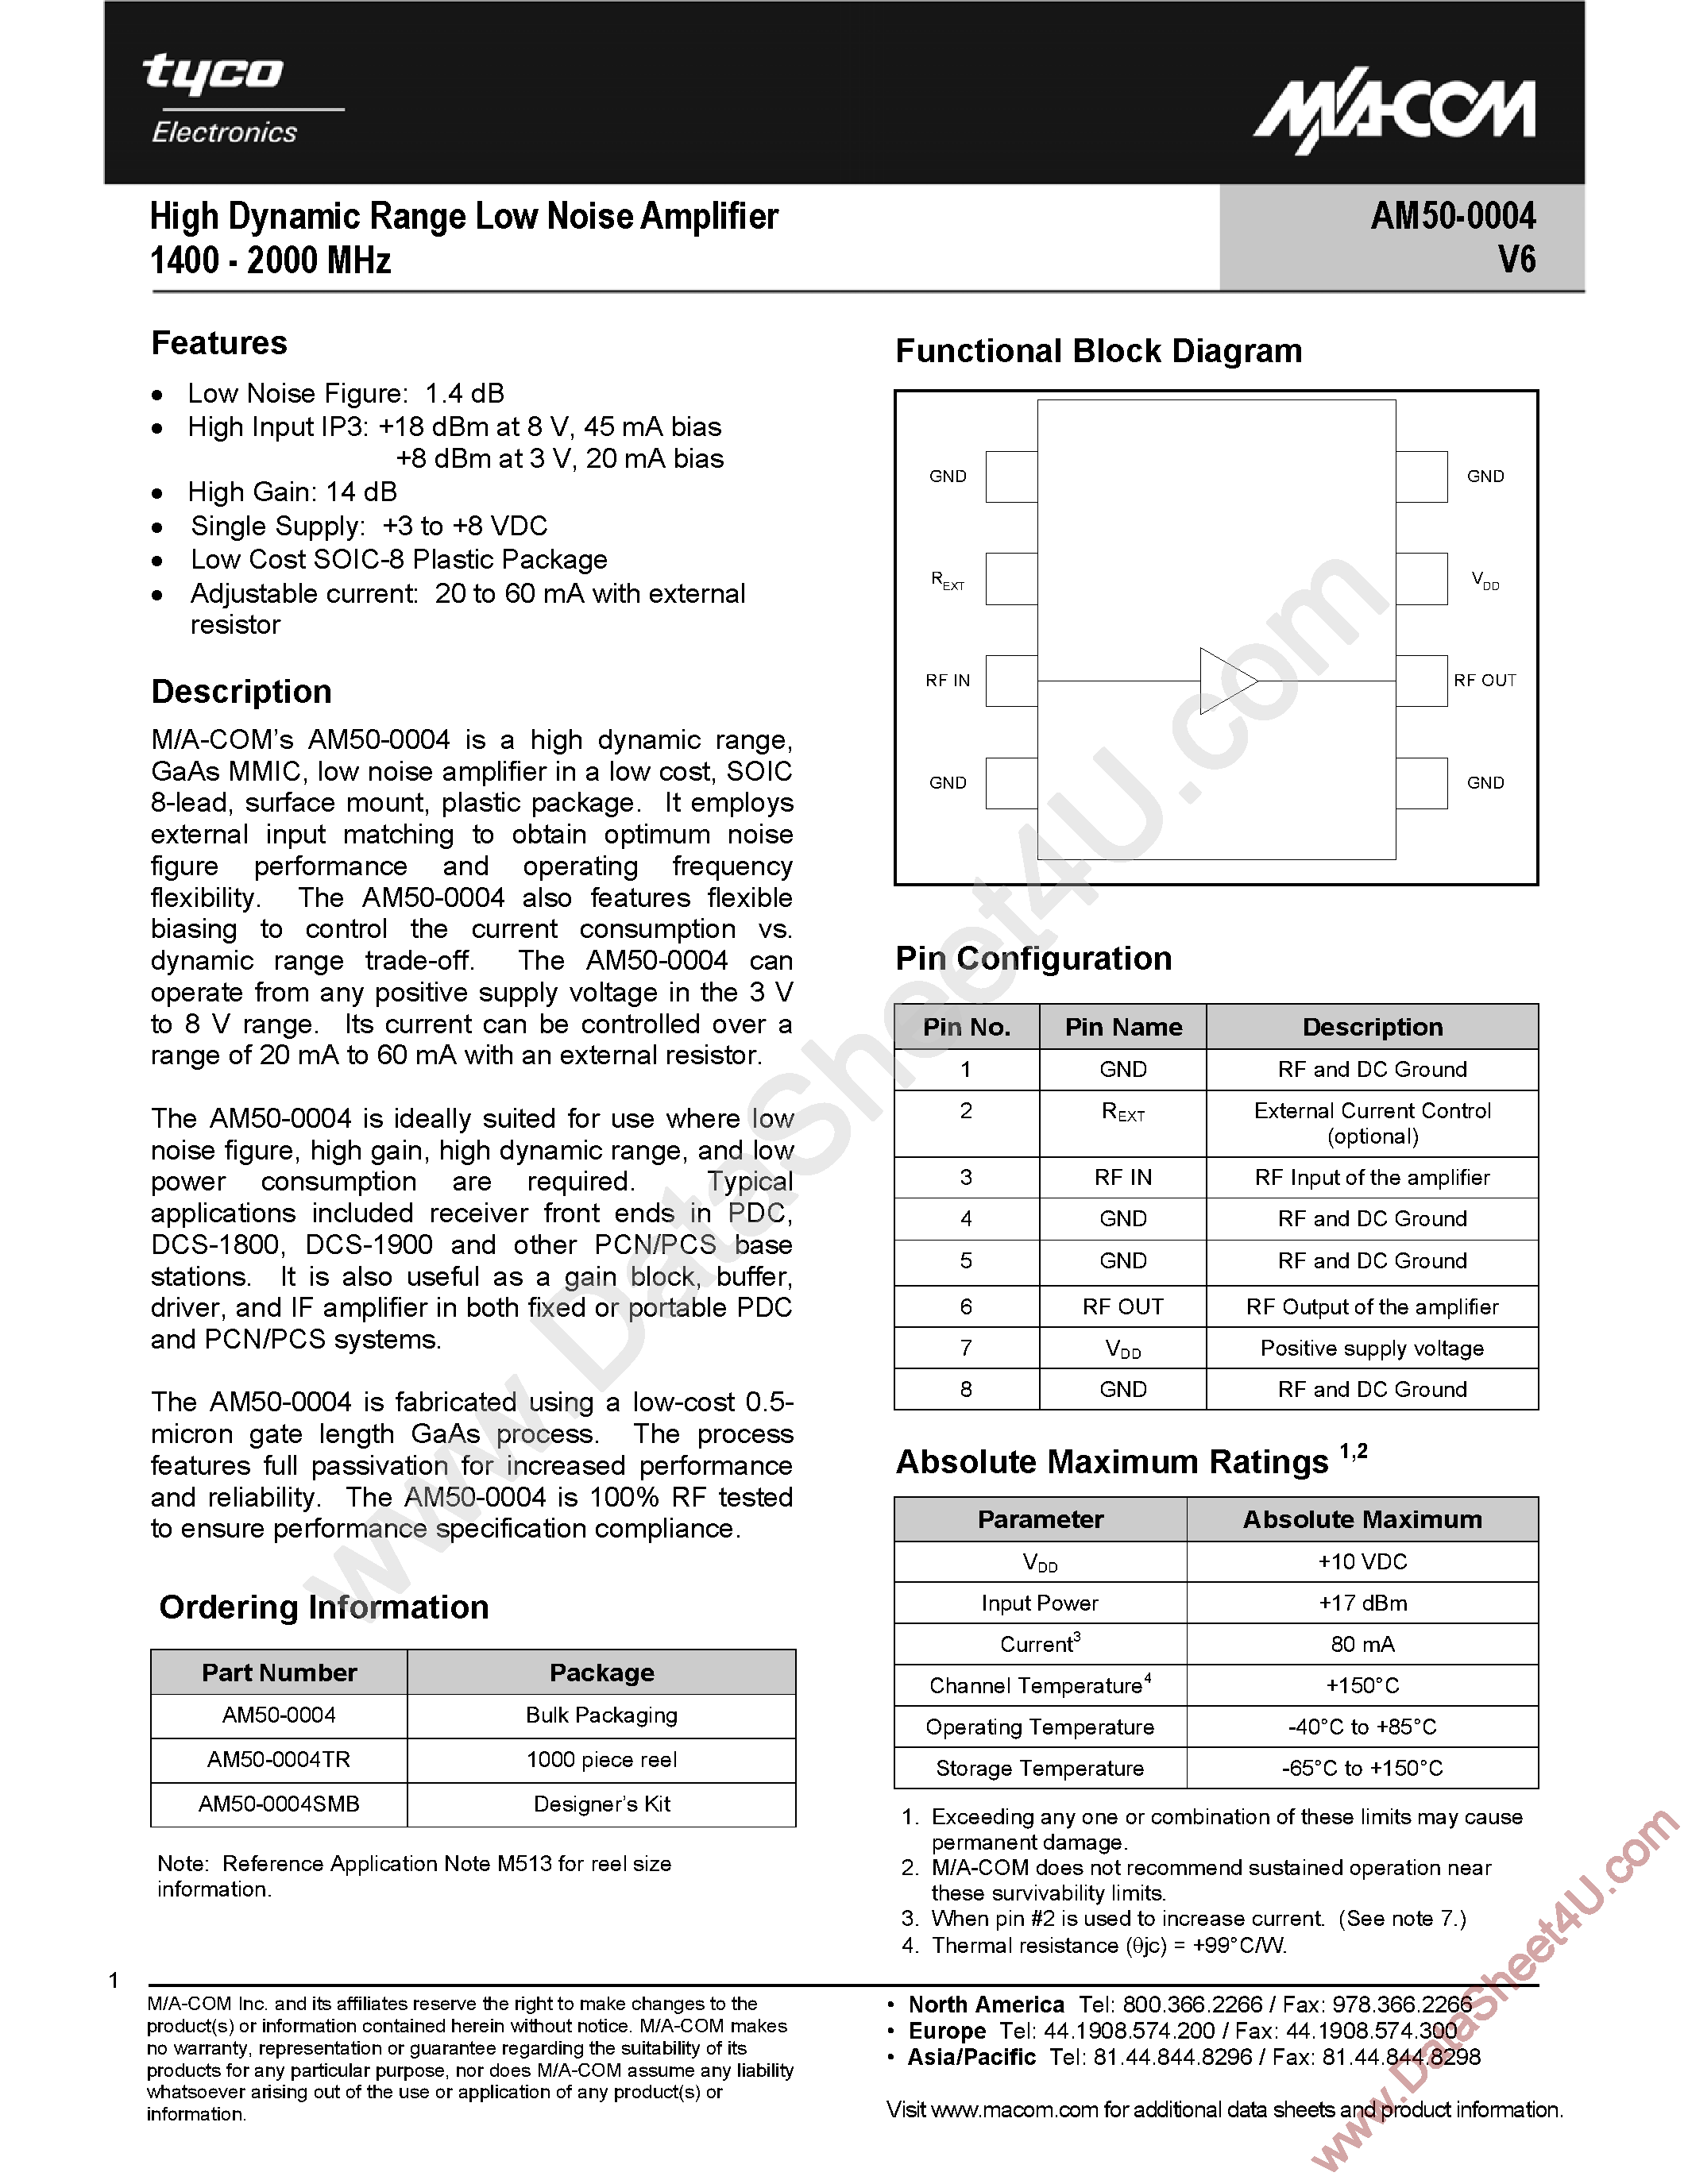 Даташит AM50-0004V6 - High Dynamic Range Low Noise Amplifier страница 1